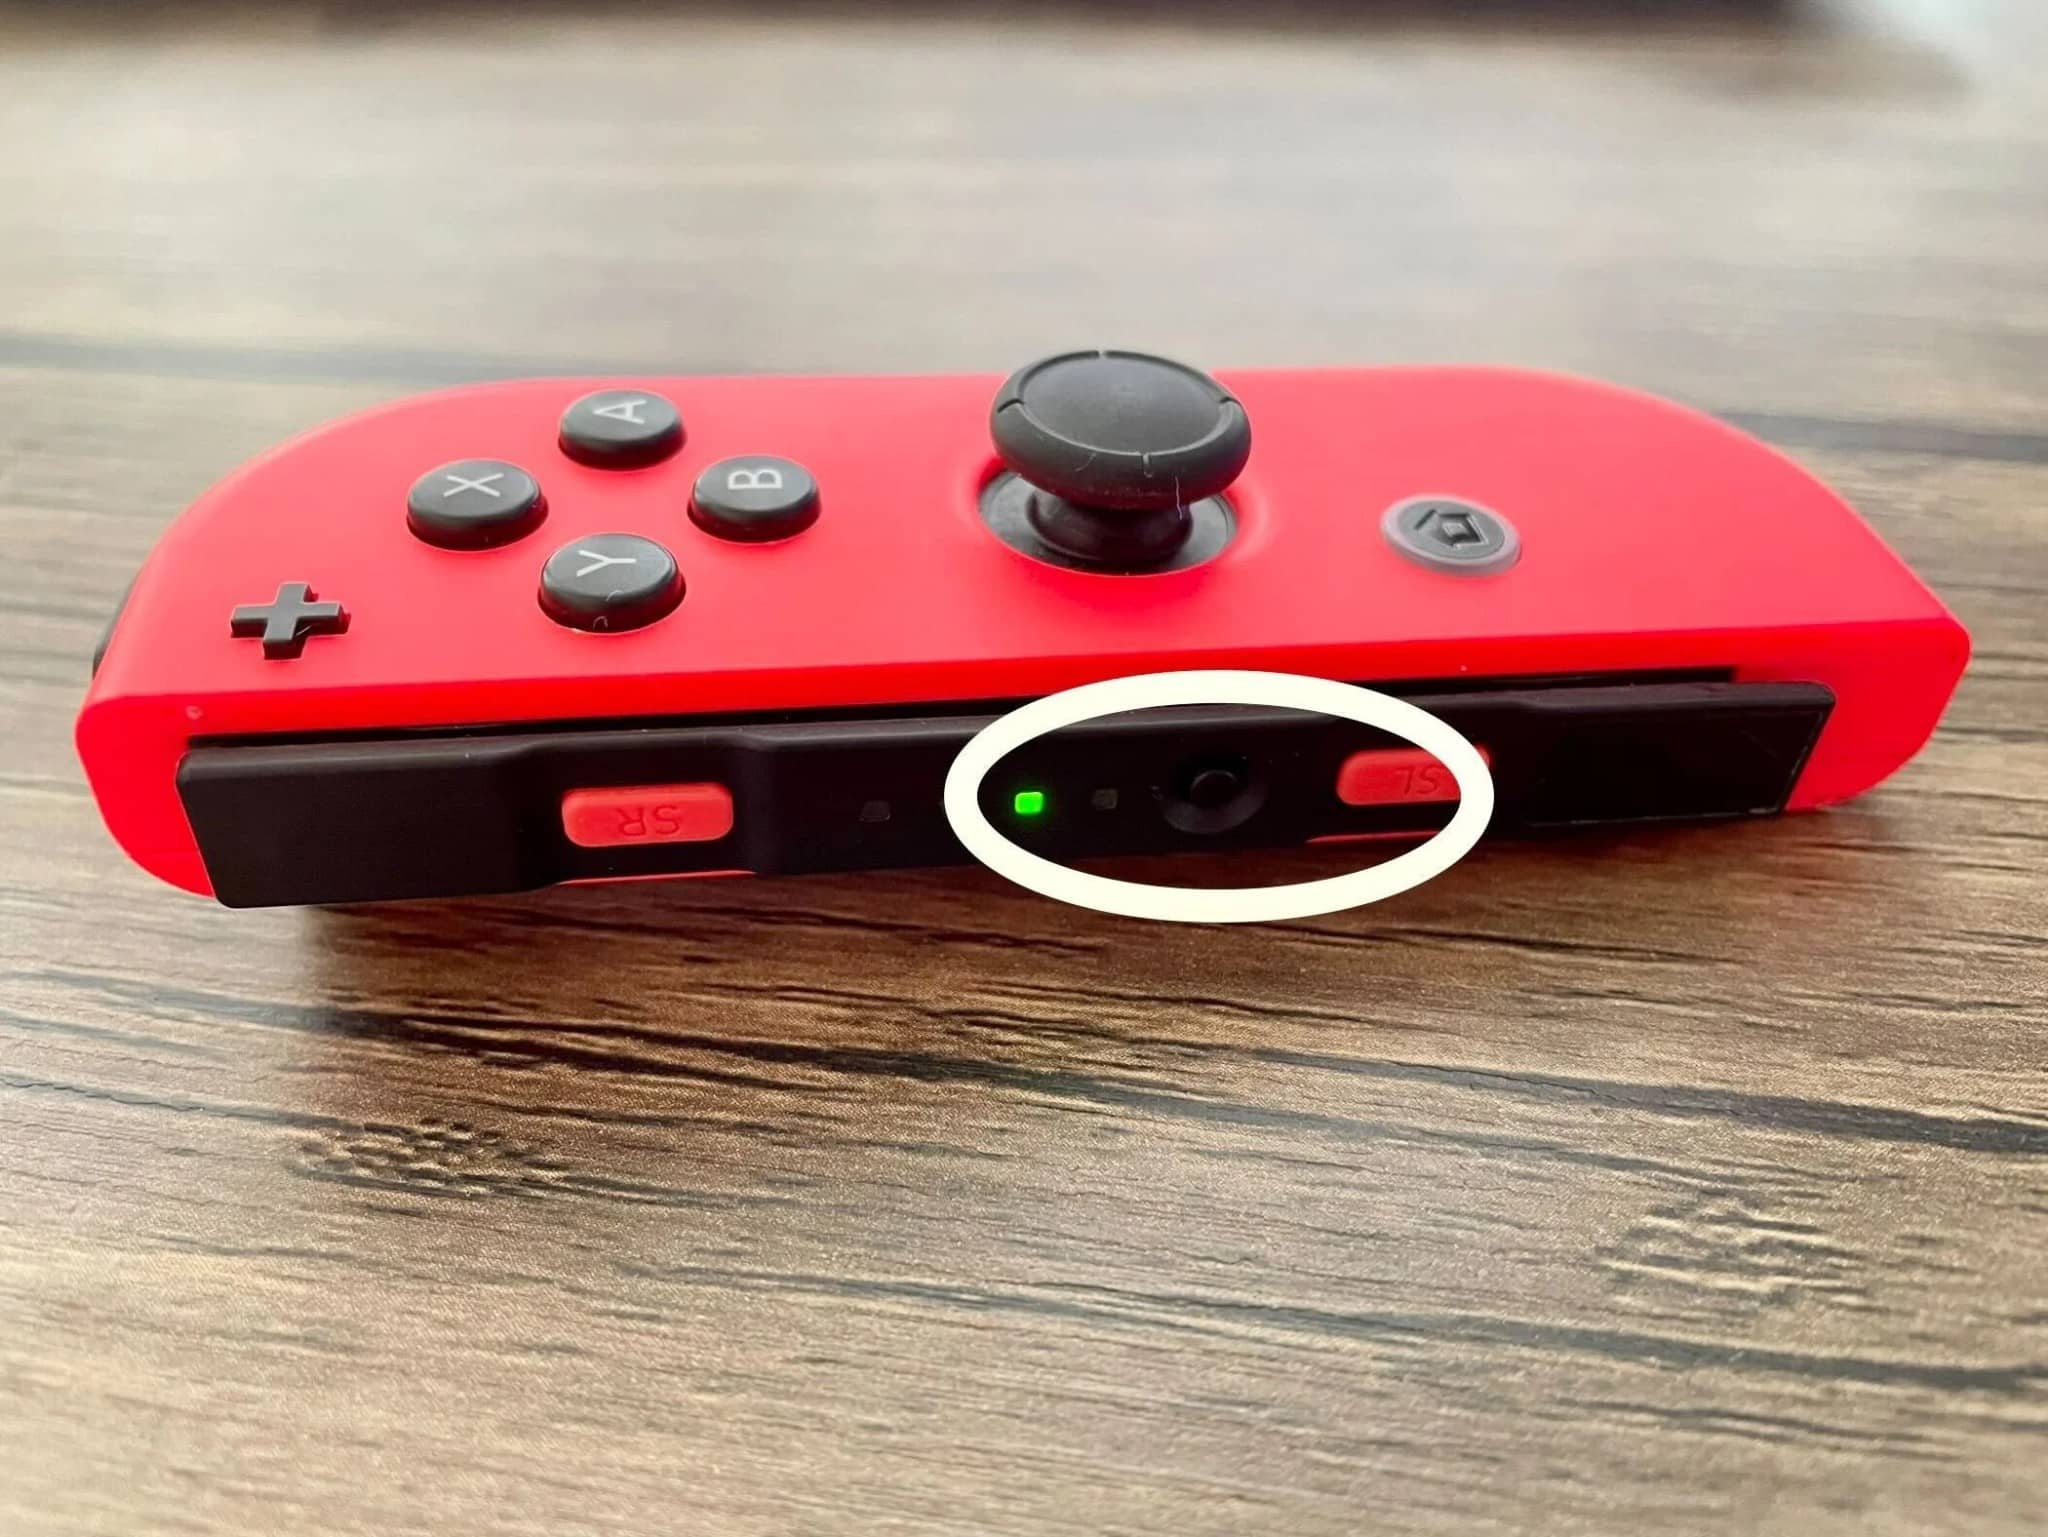 Stable LED indicator on the Nintendo Joy-Con